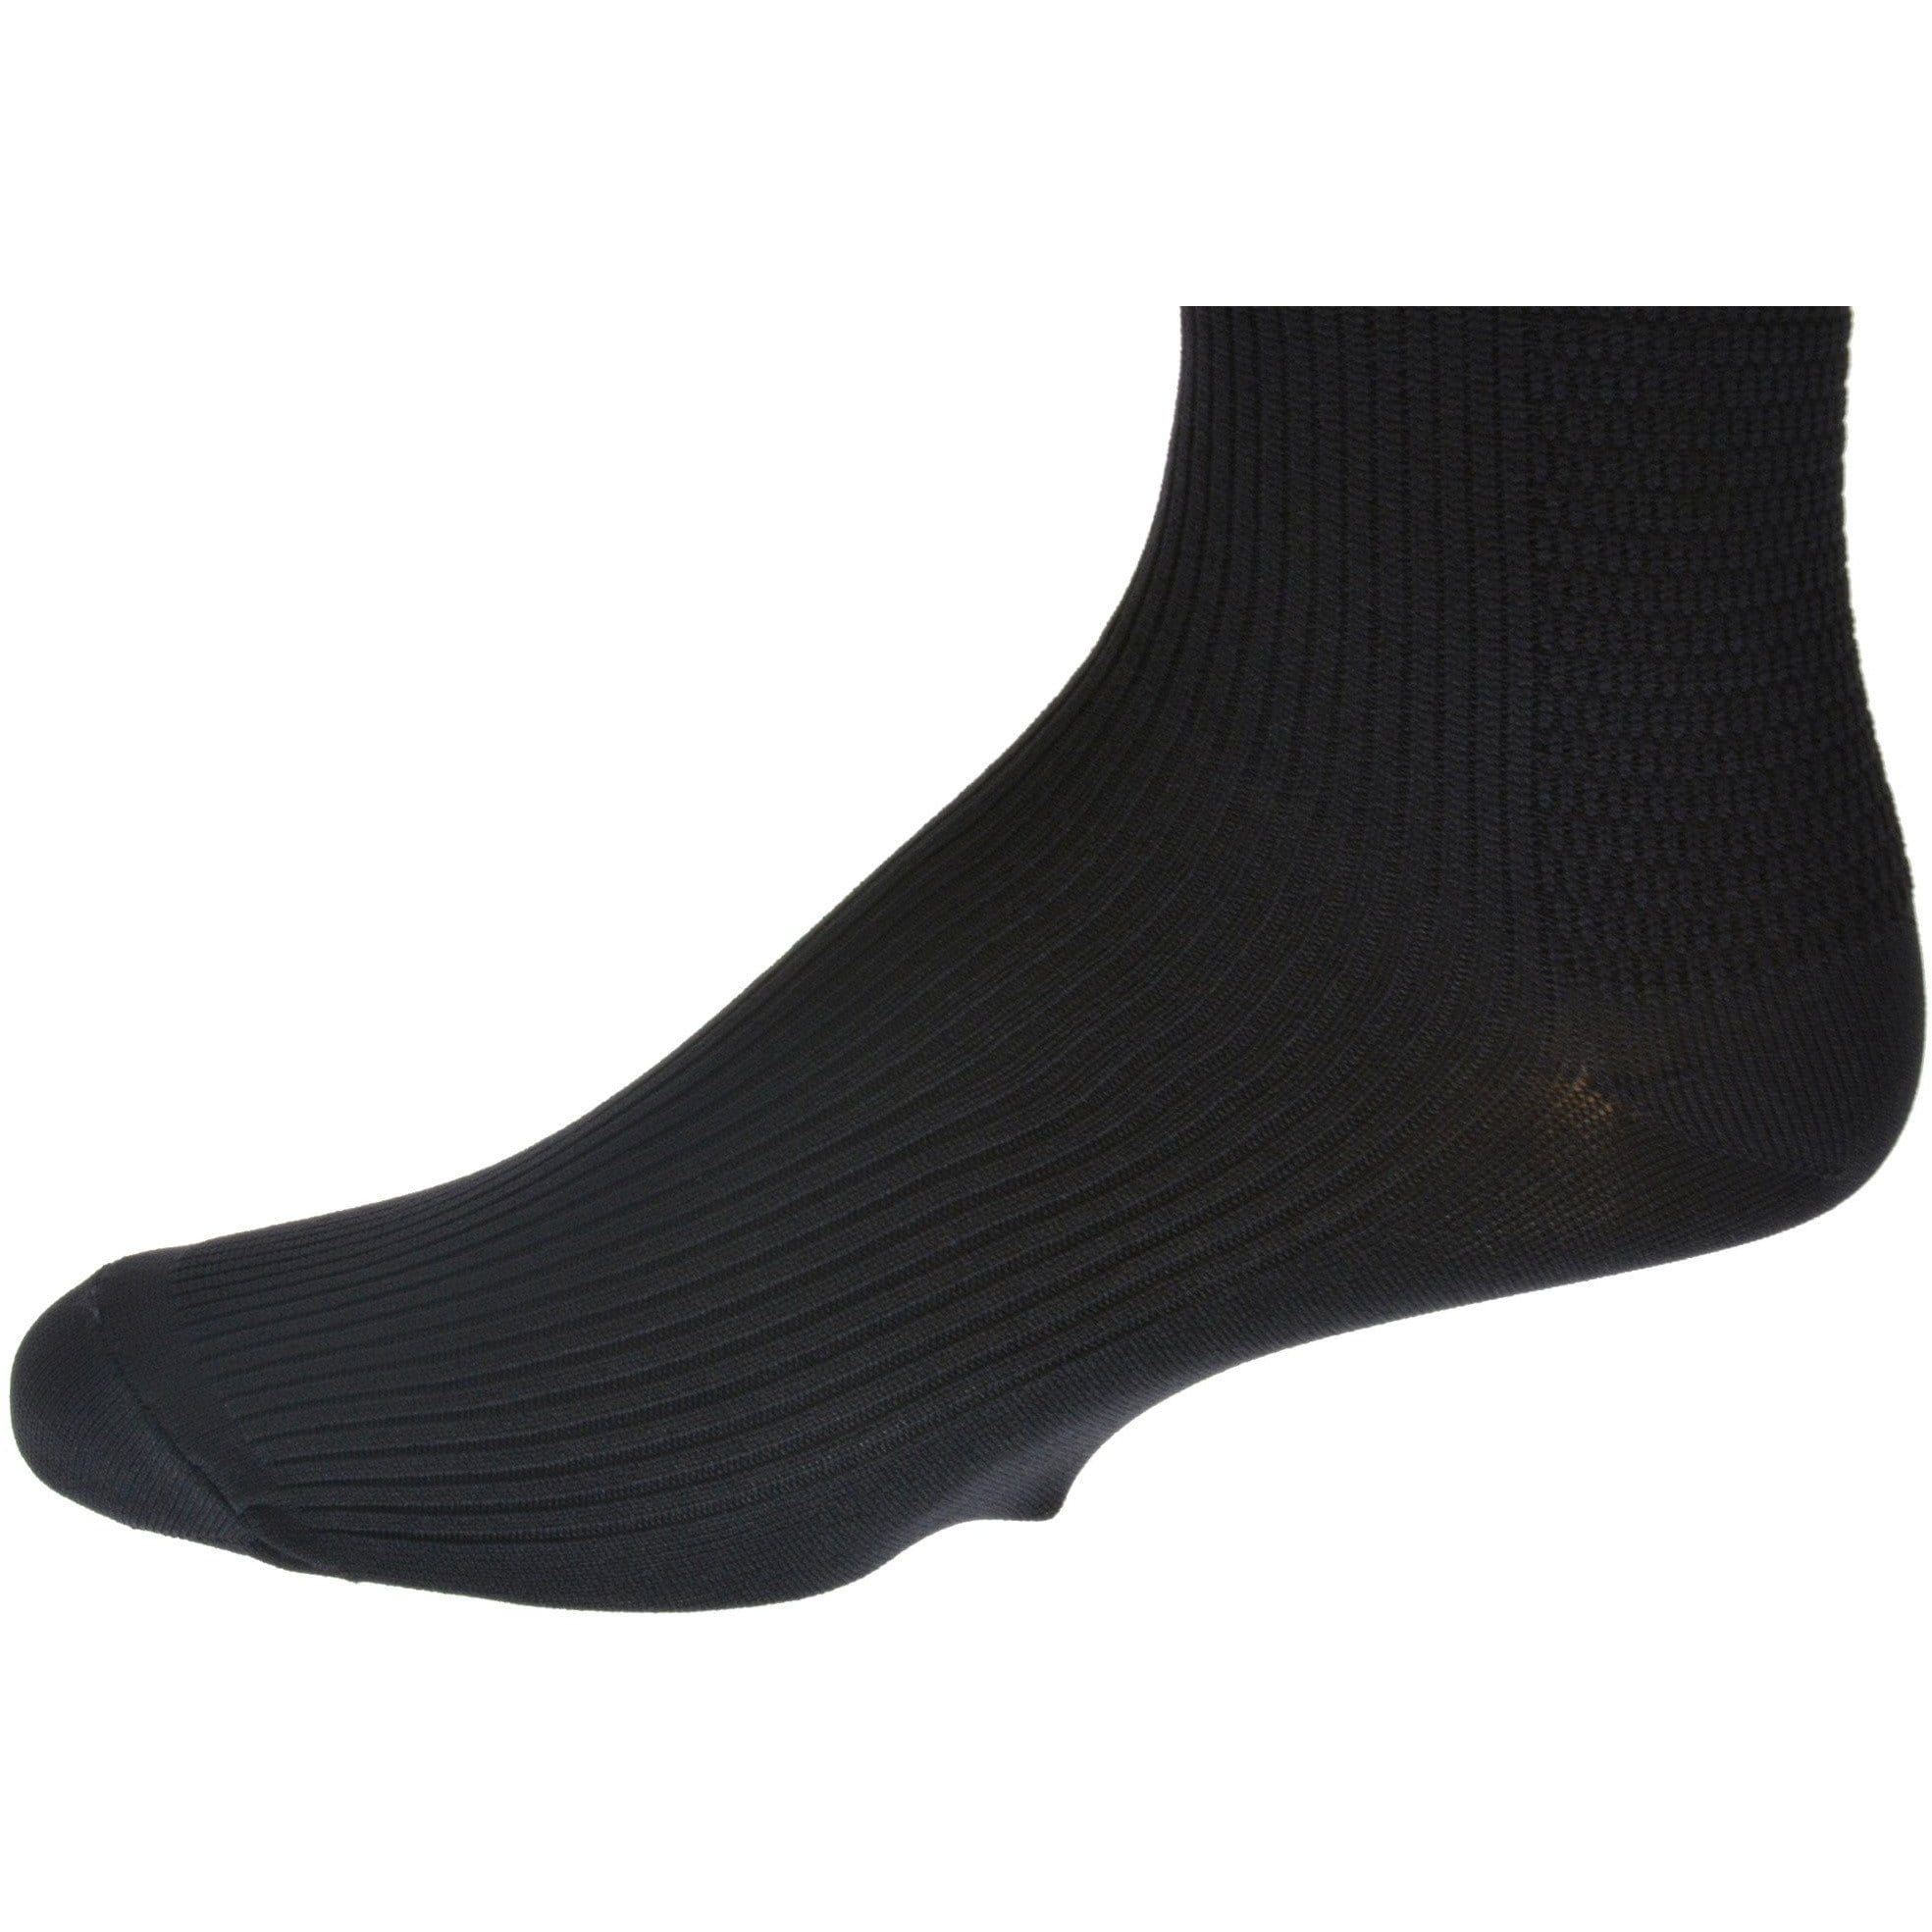 OTC Nylon Support Hose Compression Travel Socks Made in USA